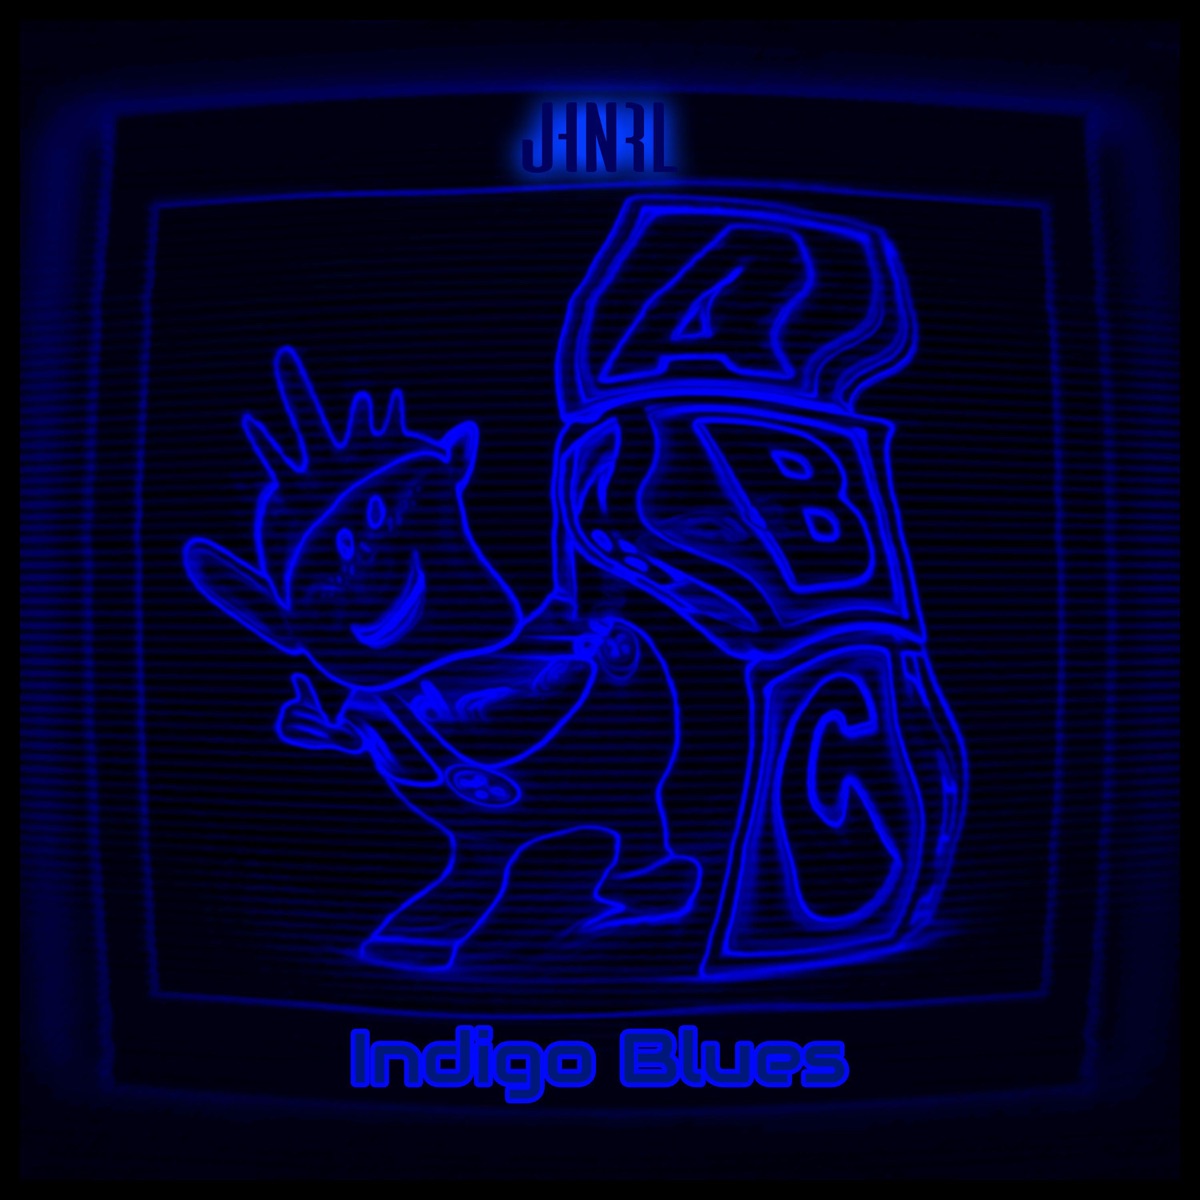 Indigo Blues - Album by JHNRL - Apple Music